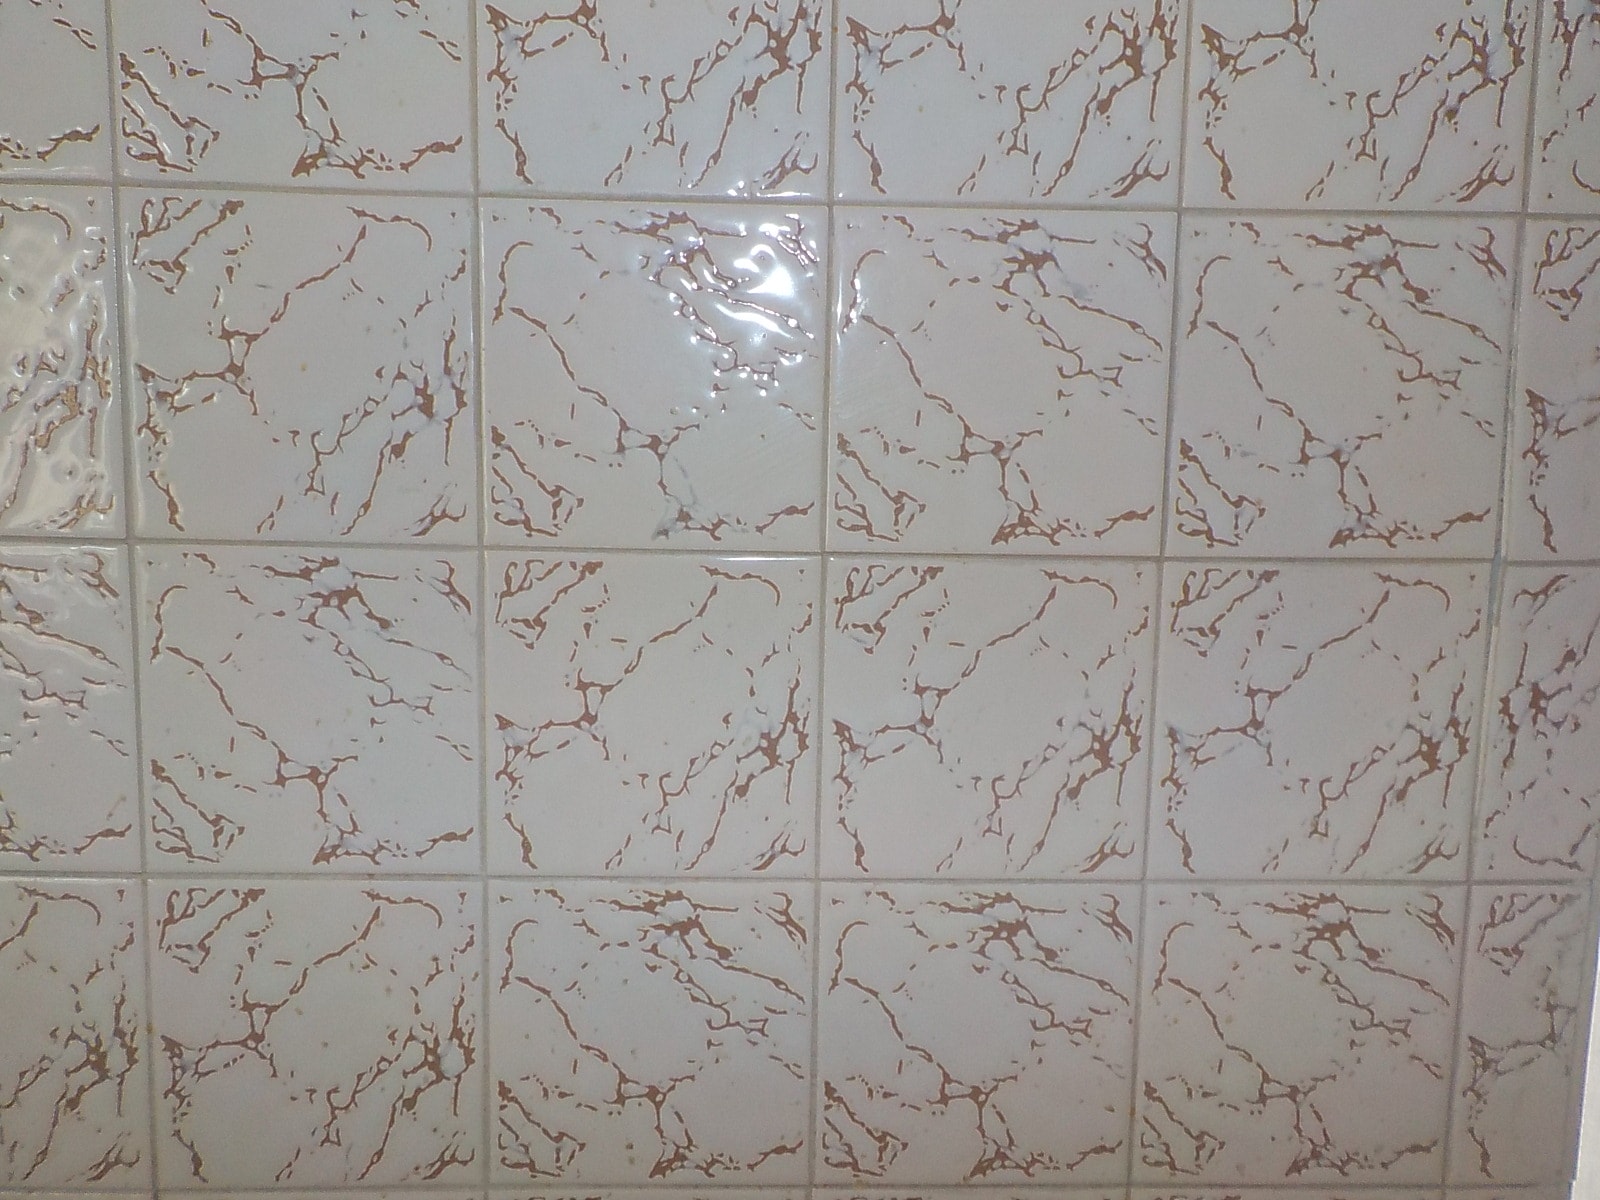 Chicken tiles